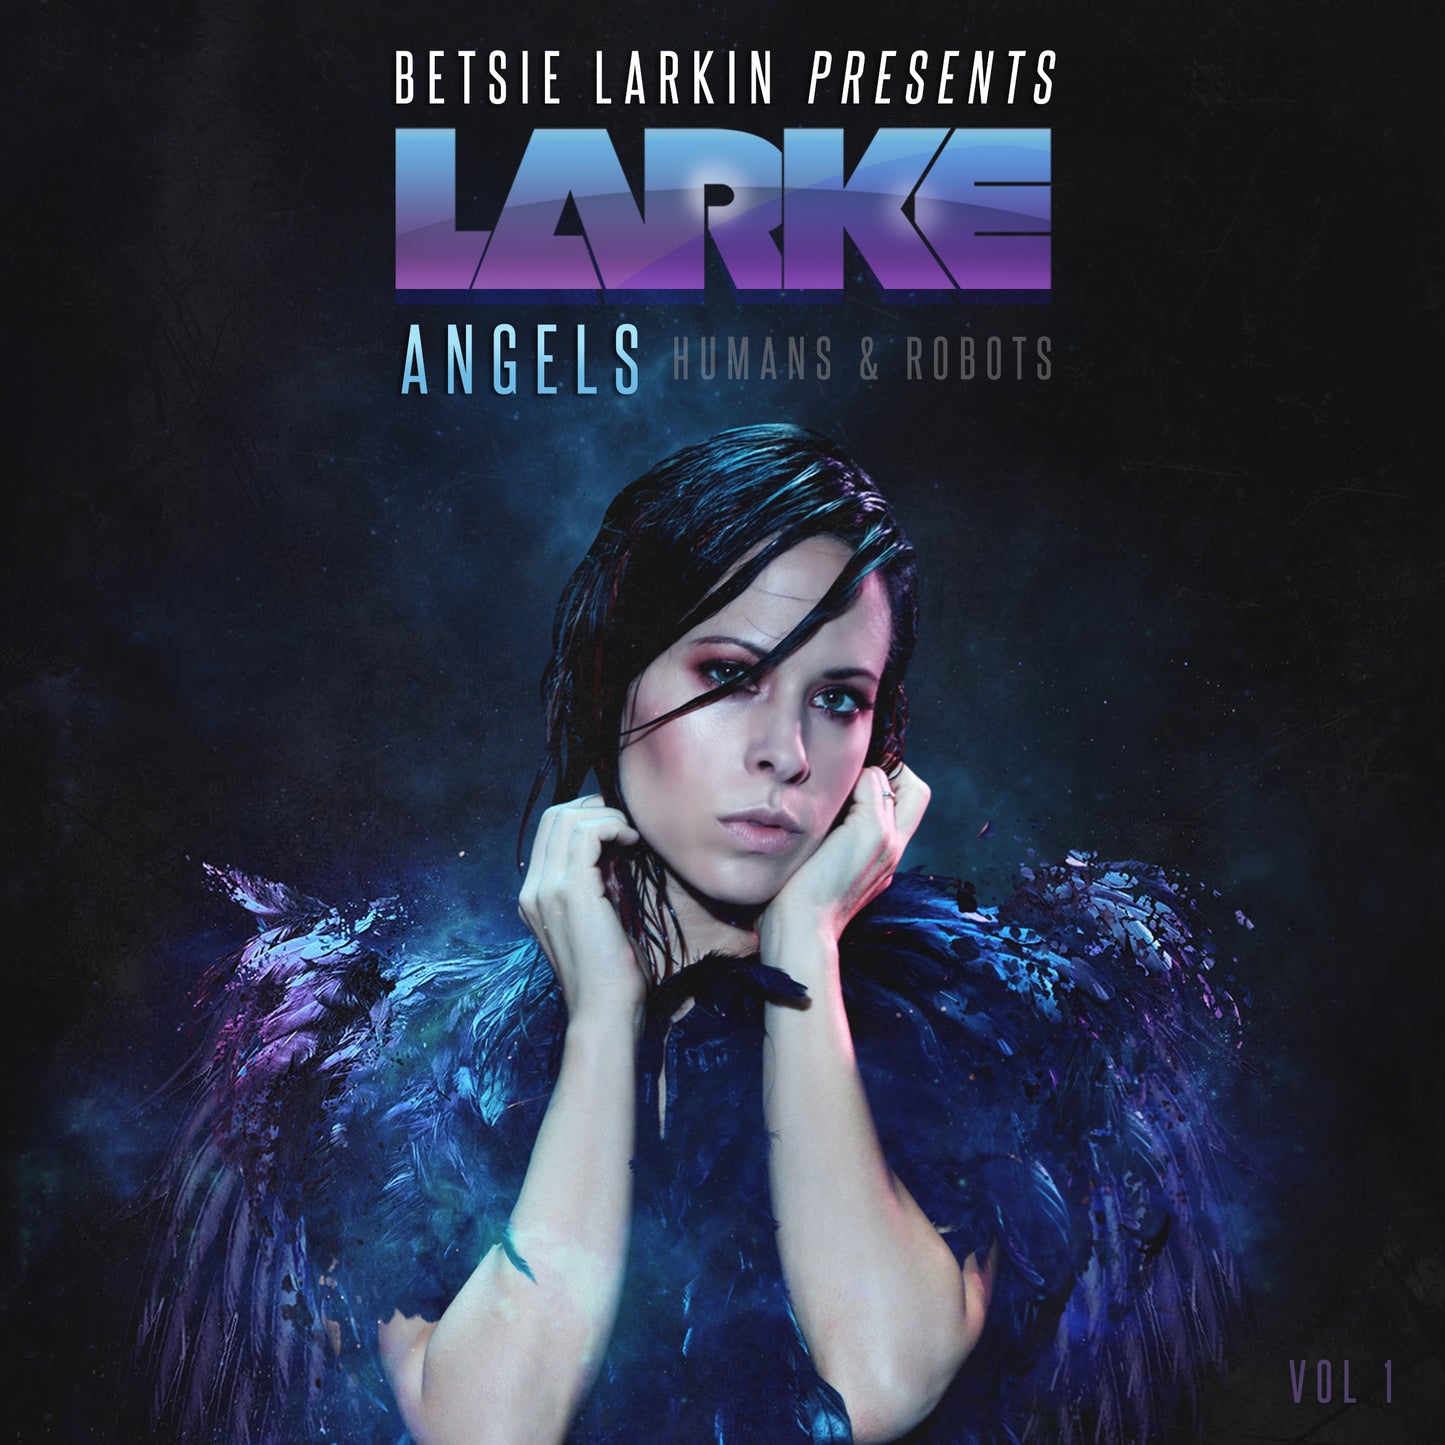 Betsie Larkin presents LARKE - Angels, Humans & Robots